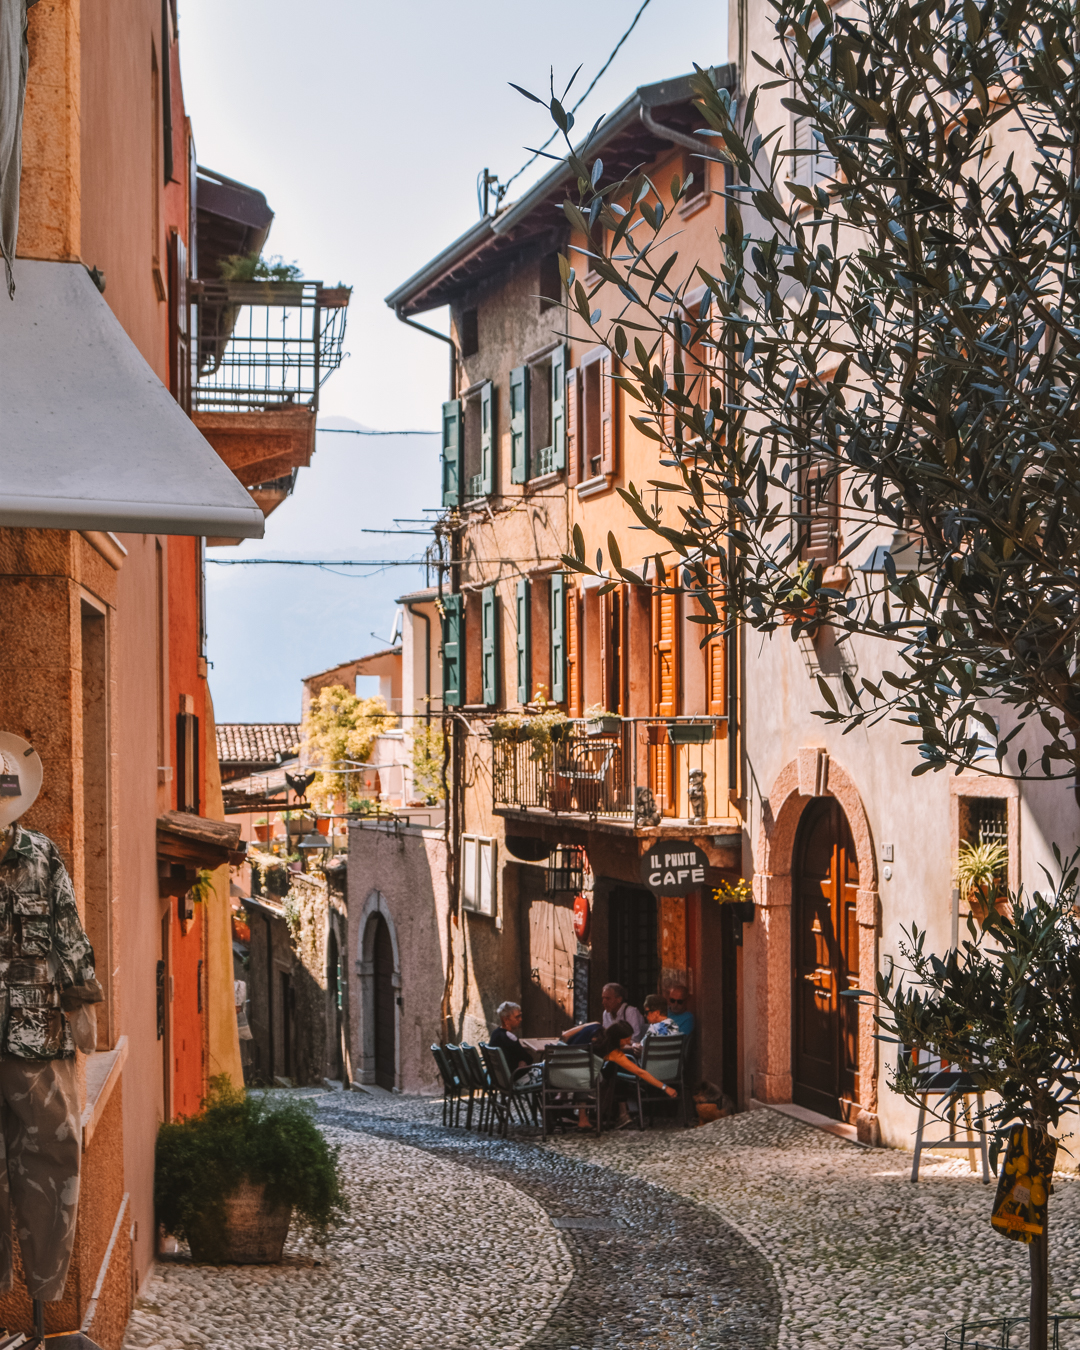 A winding street with cute buildings on it in Malcesine